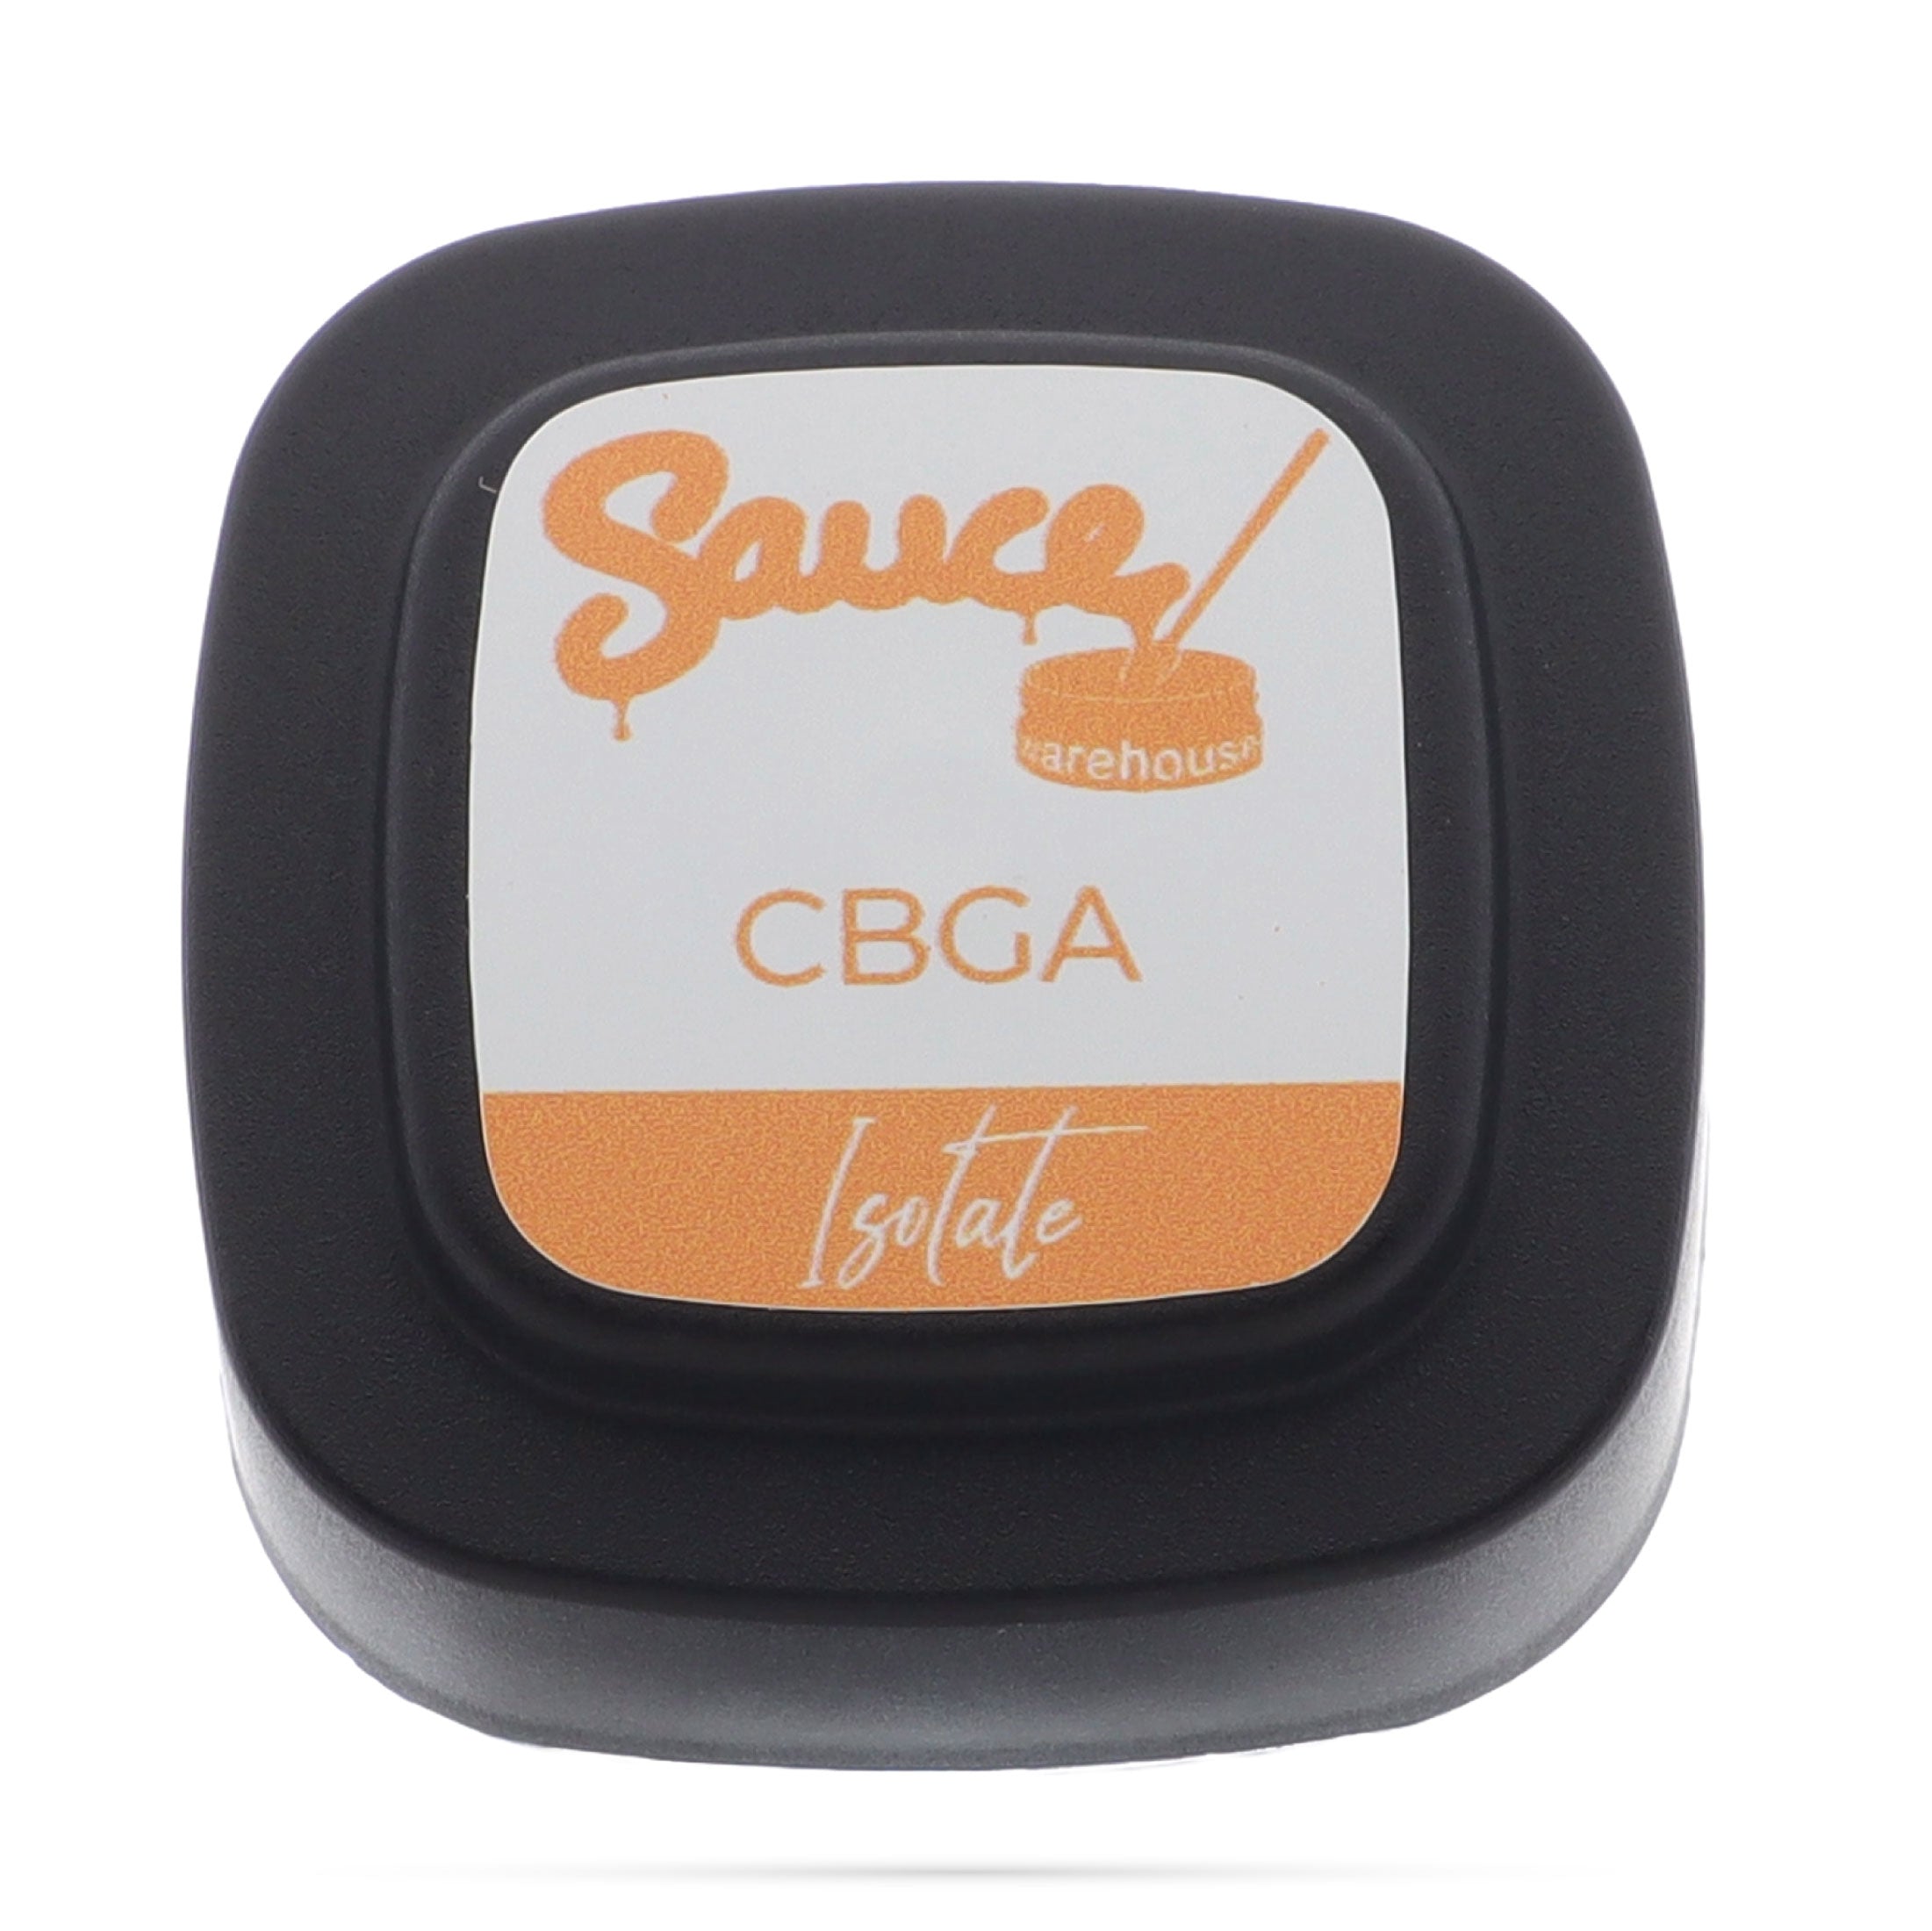 Image of Sauce Warehouse CBGa Isolate lid label.